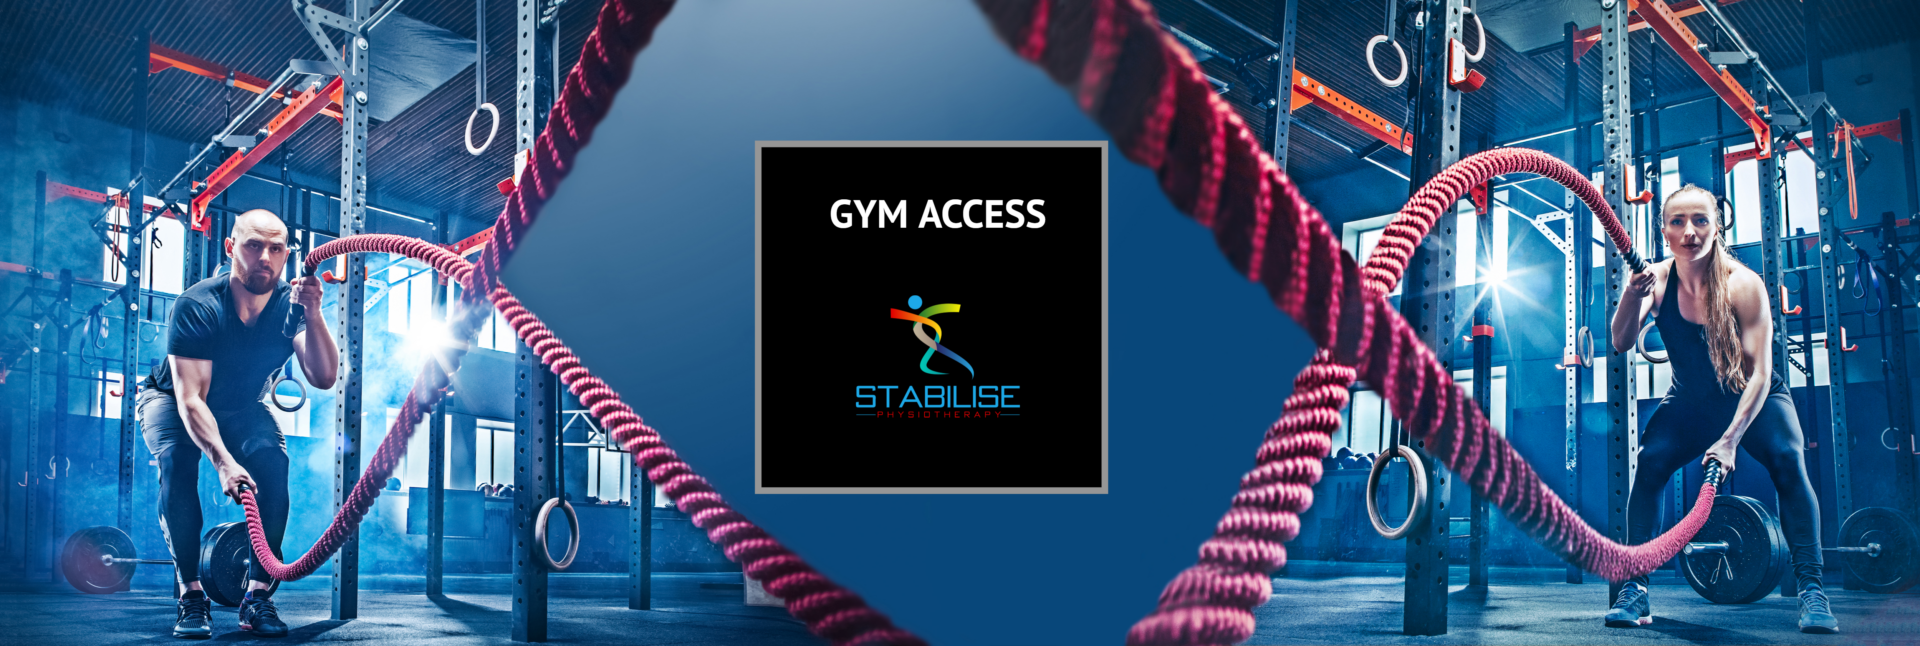 gym access website